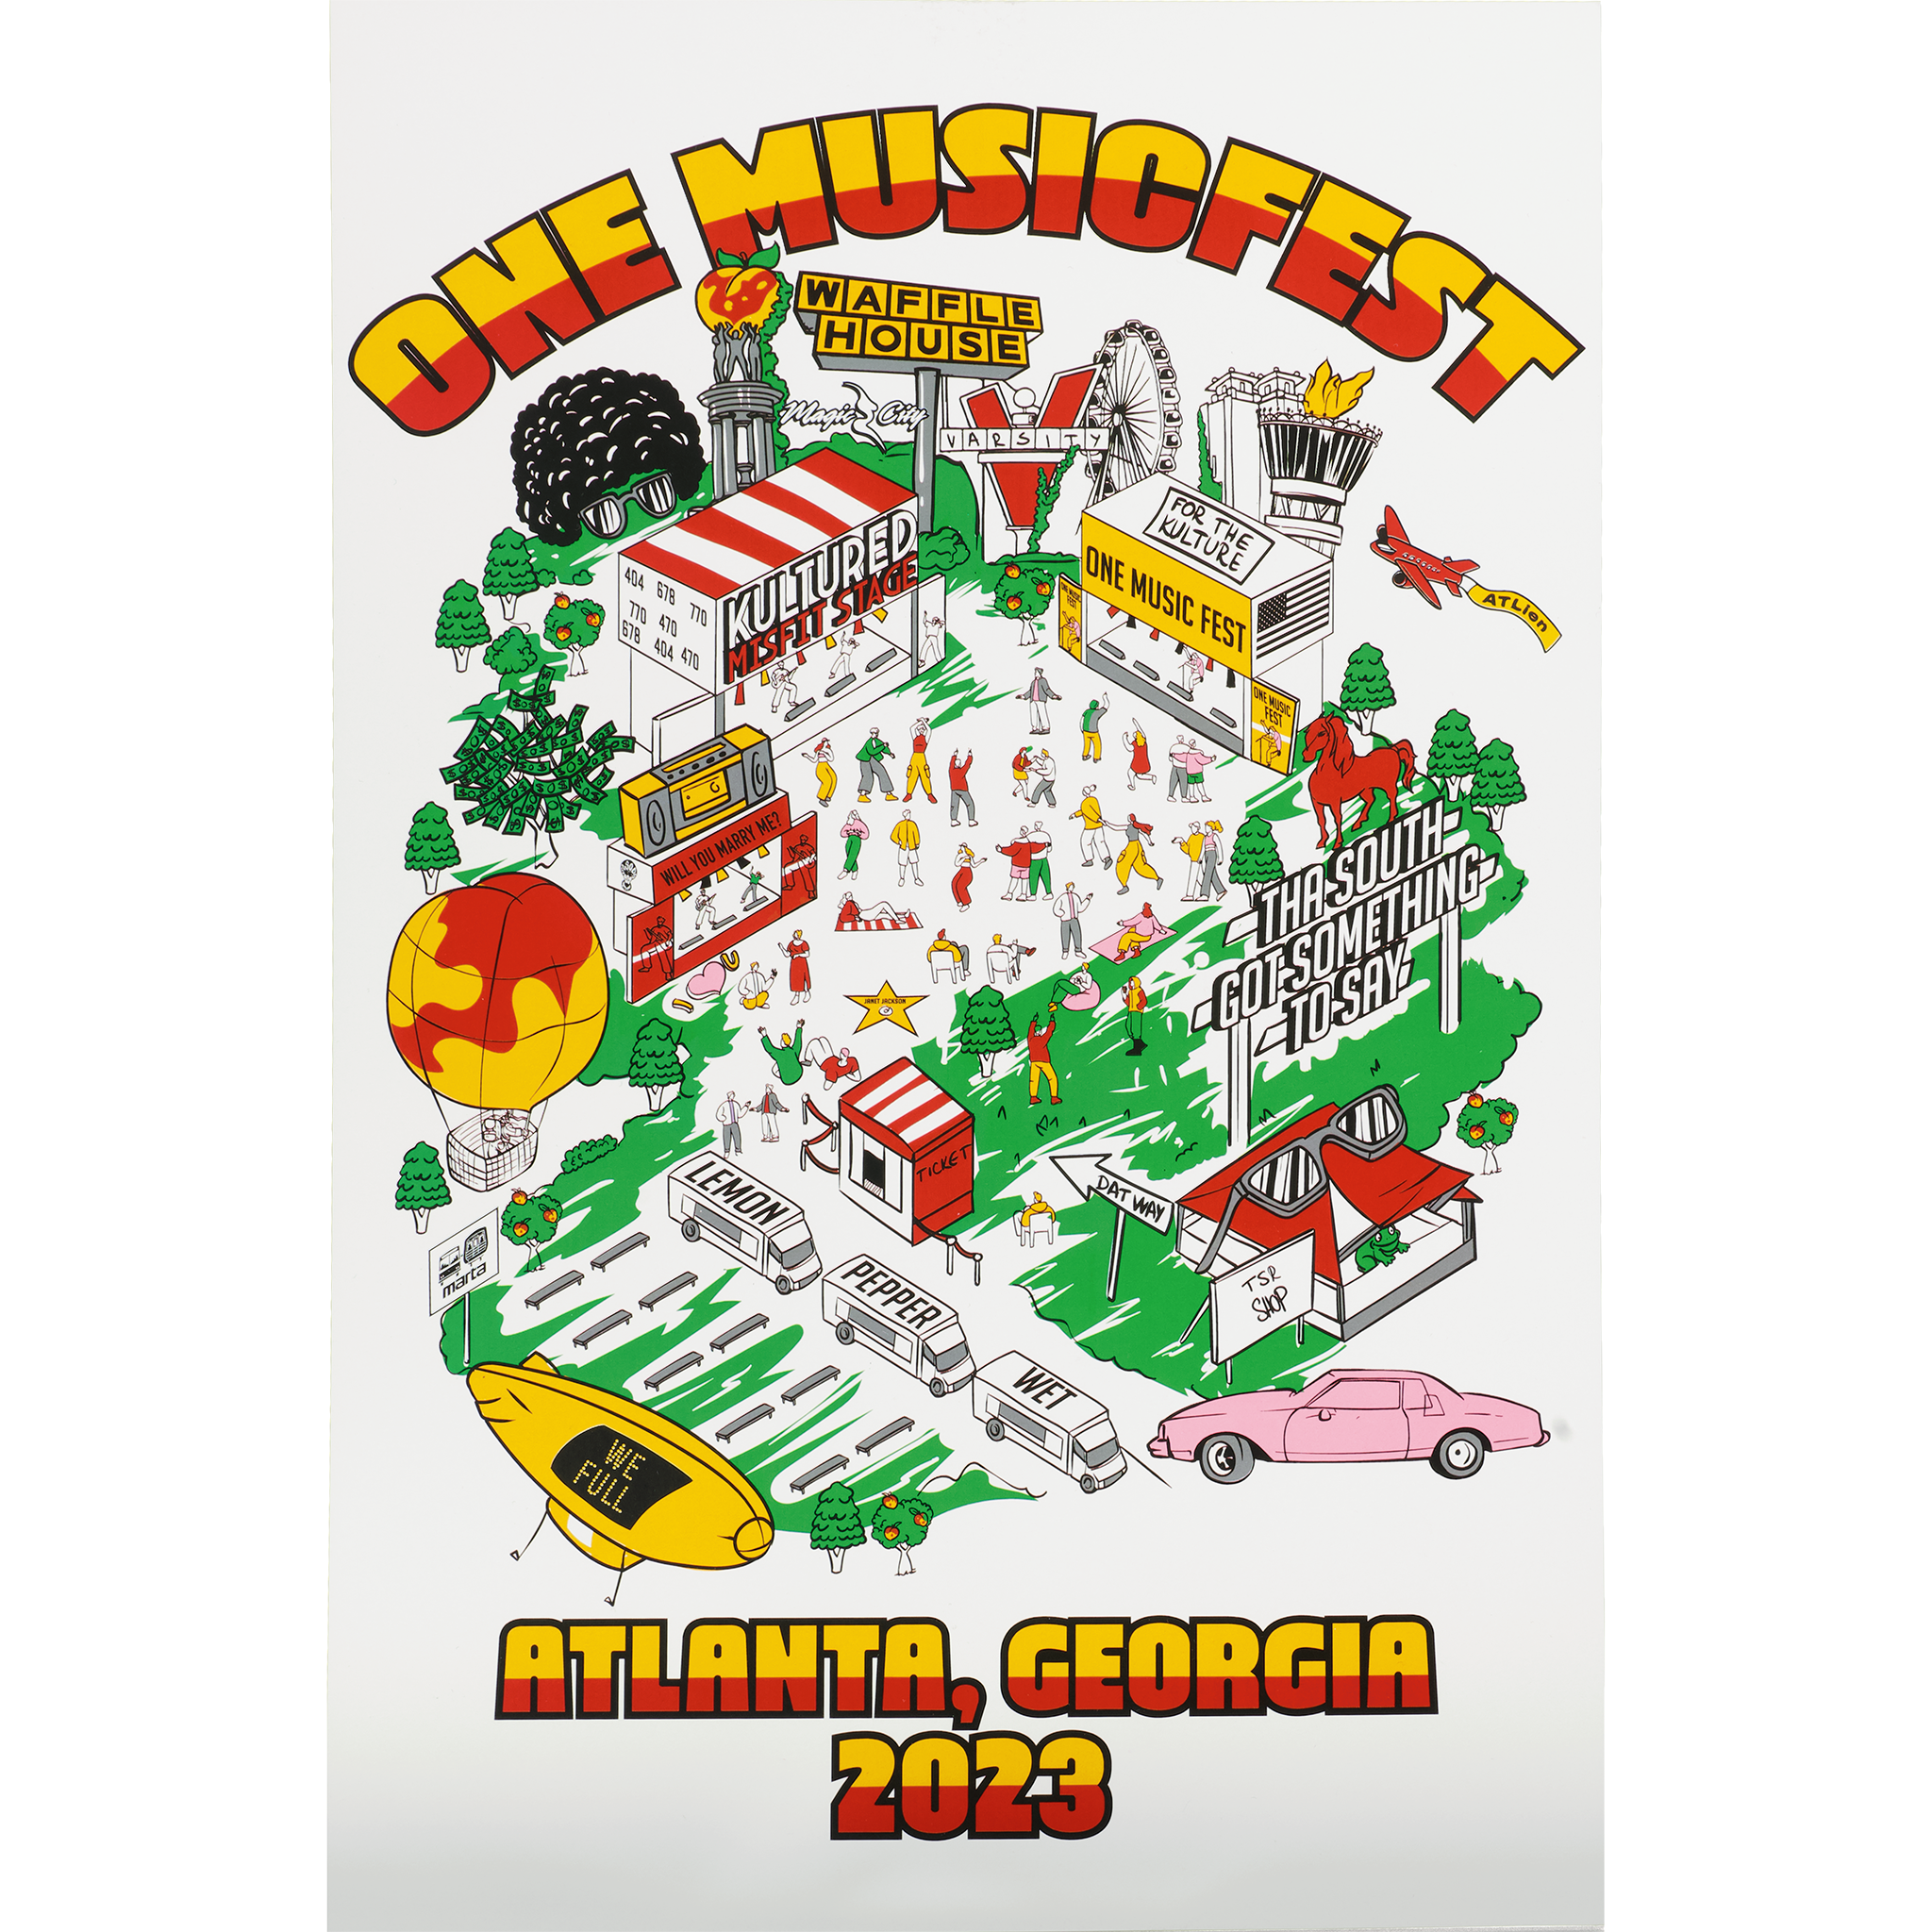 One Music Fest x Kultured Misfits "For the Kulture" Poster